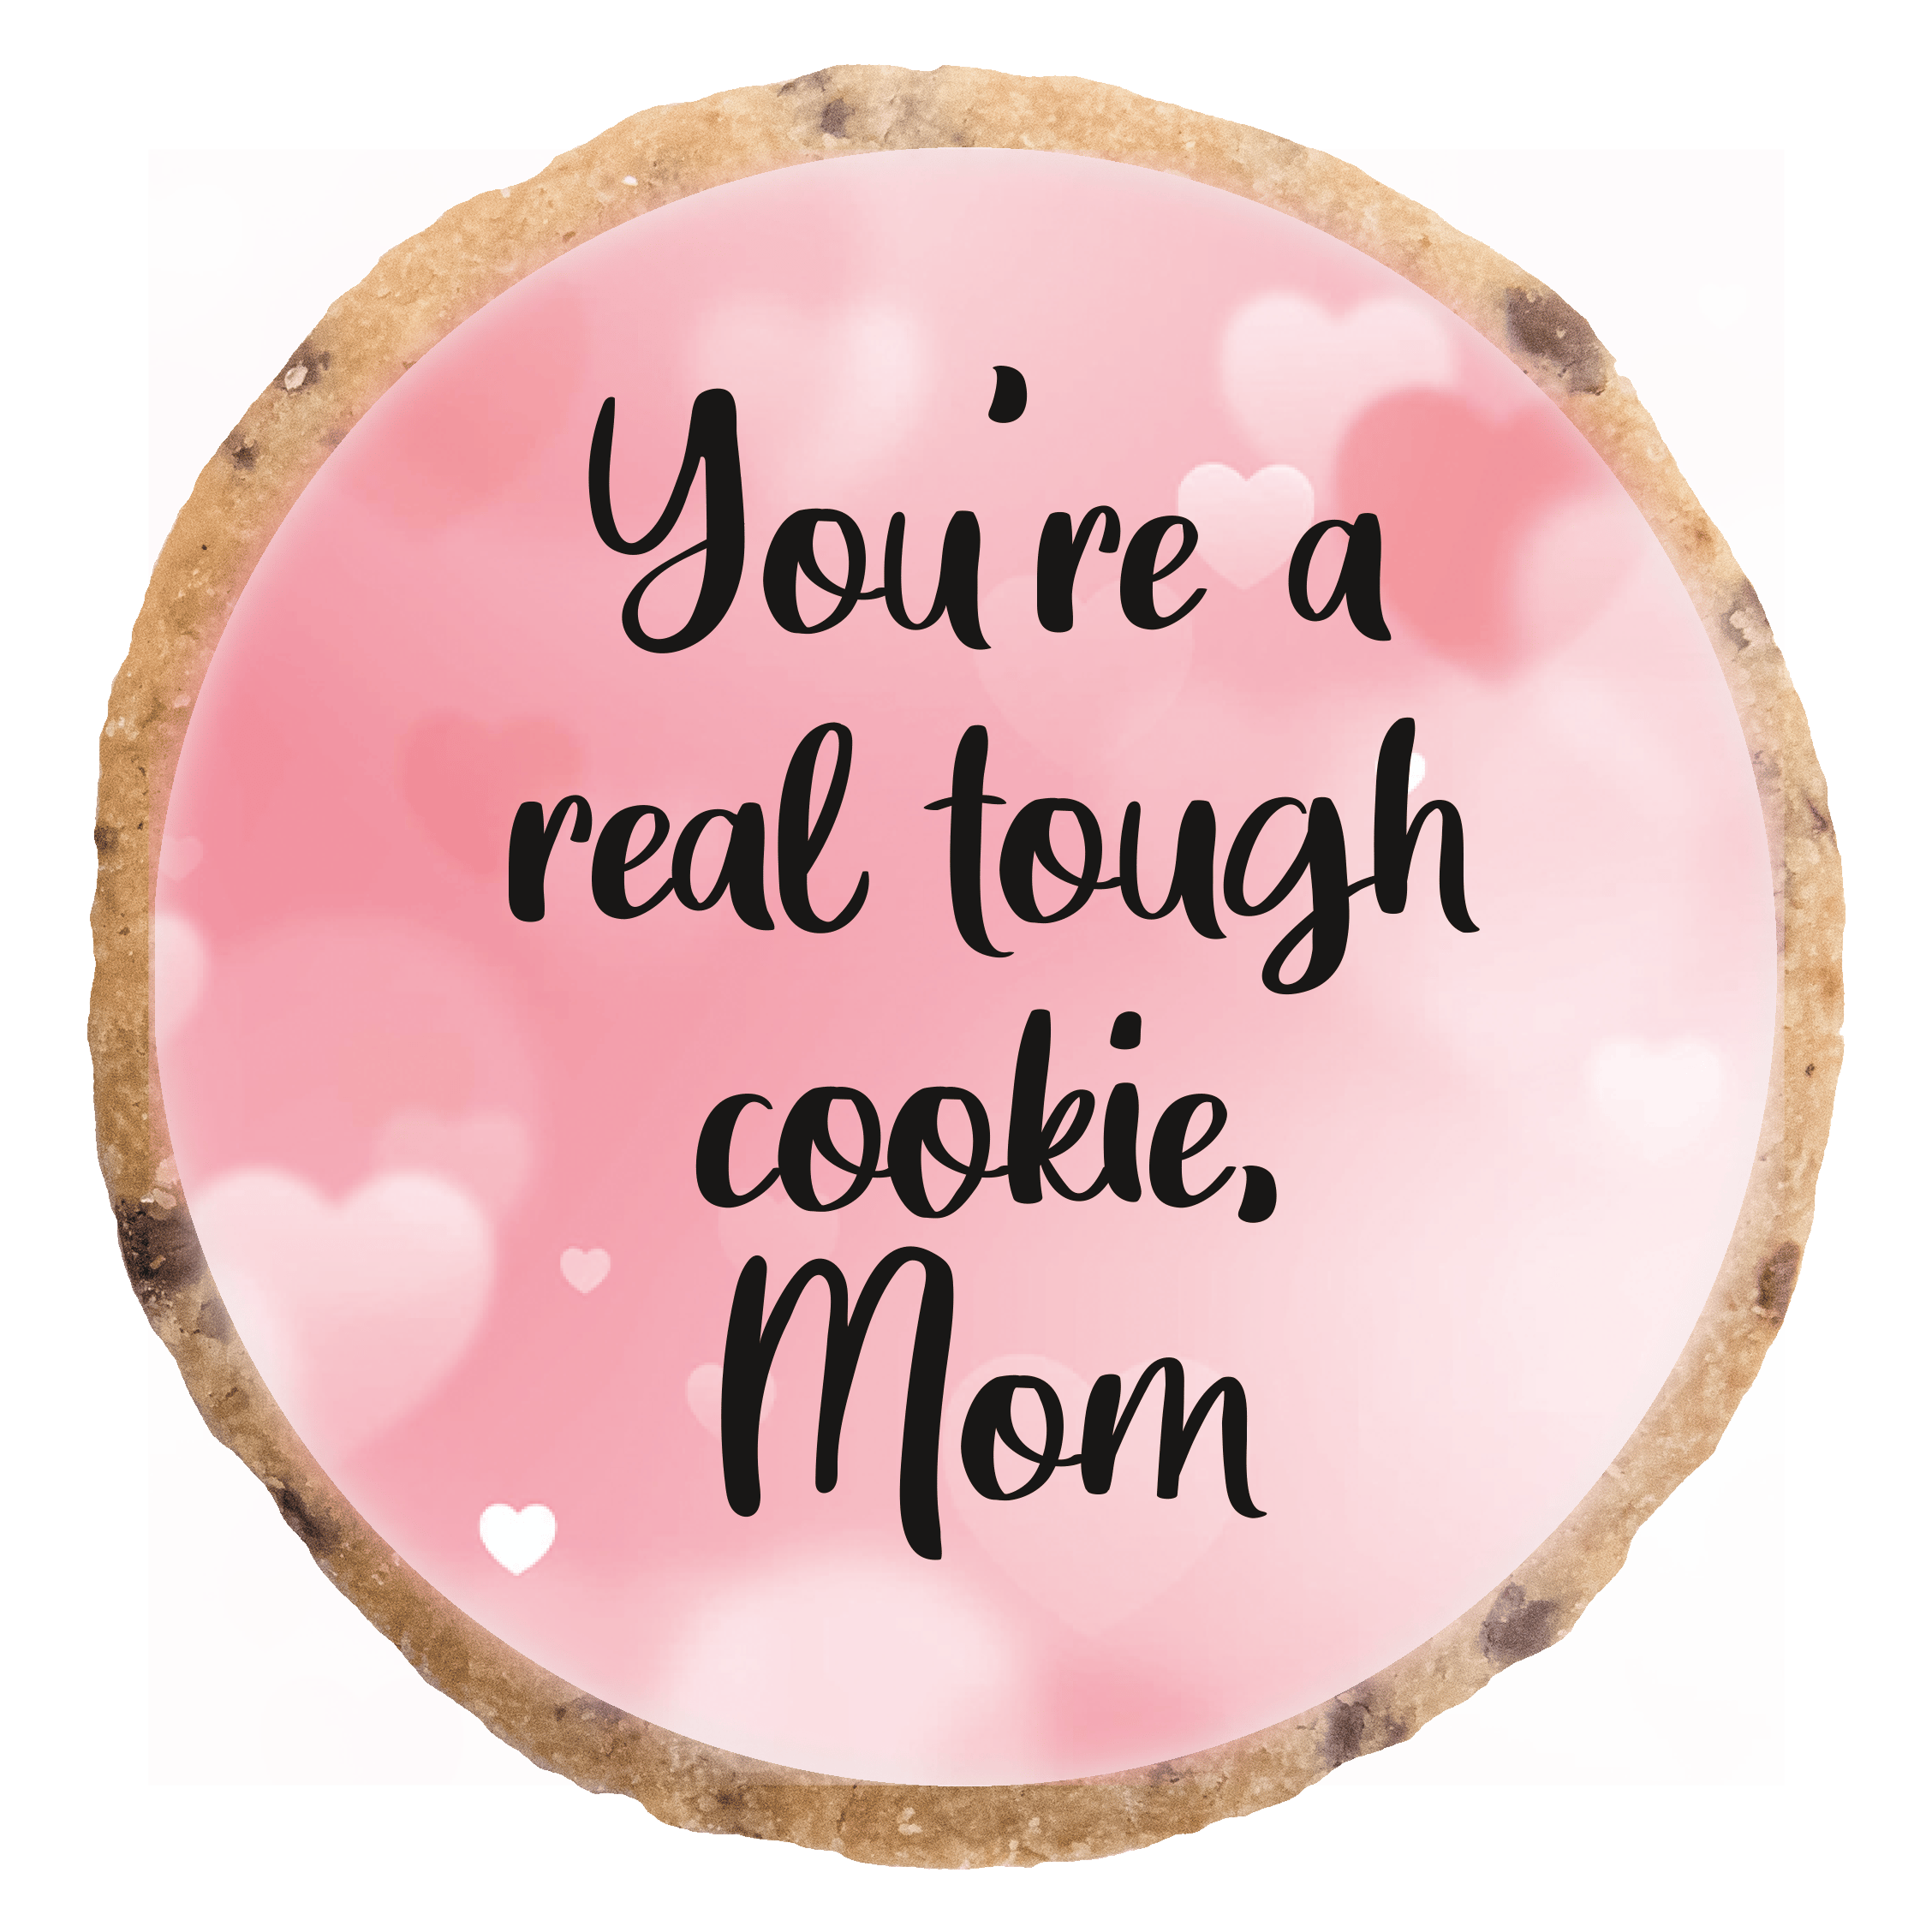 "You're a real tough cookie, Mom" MotivKEKS 